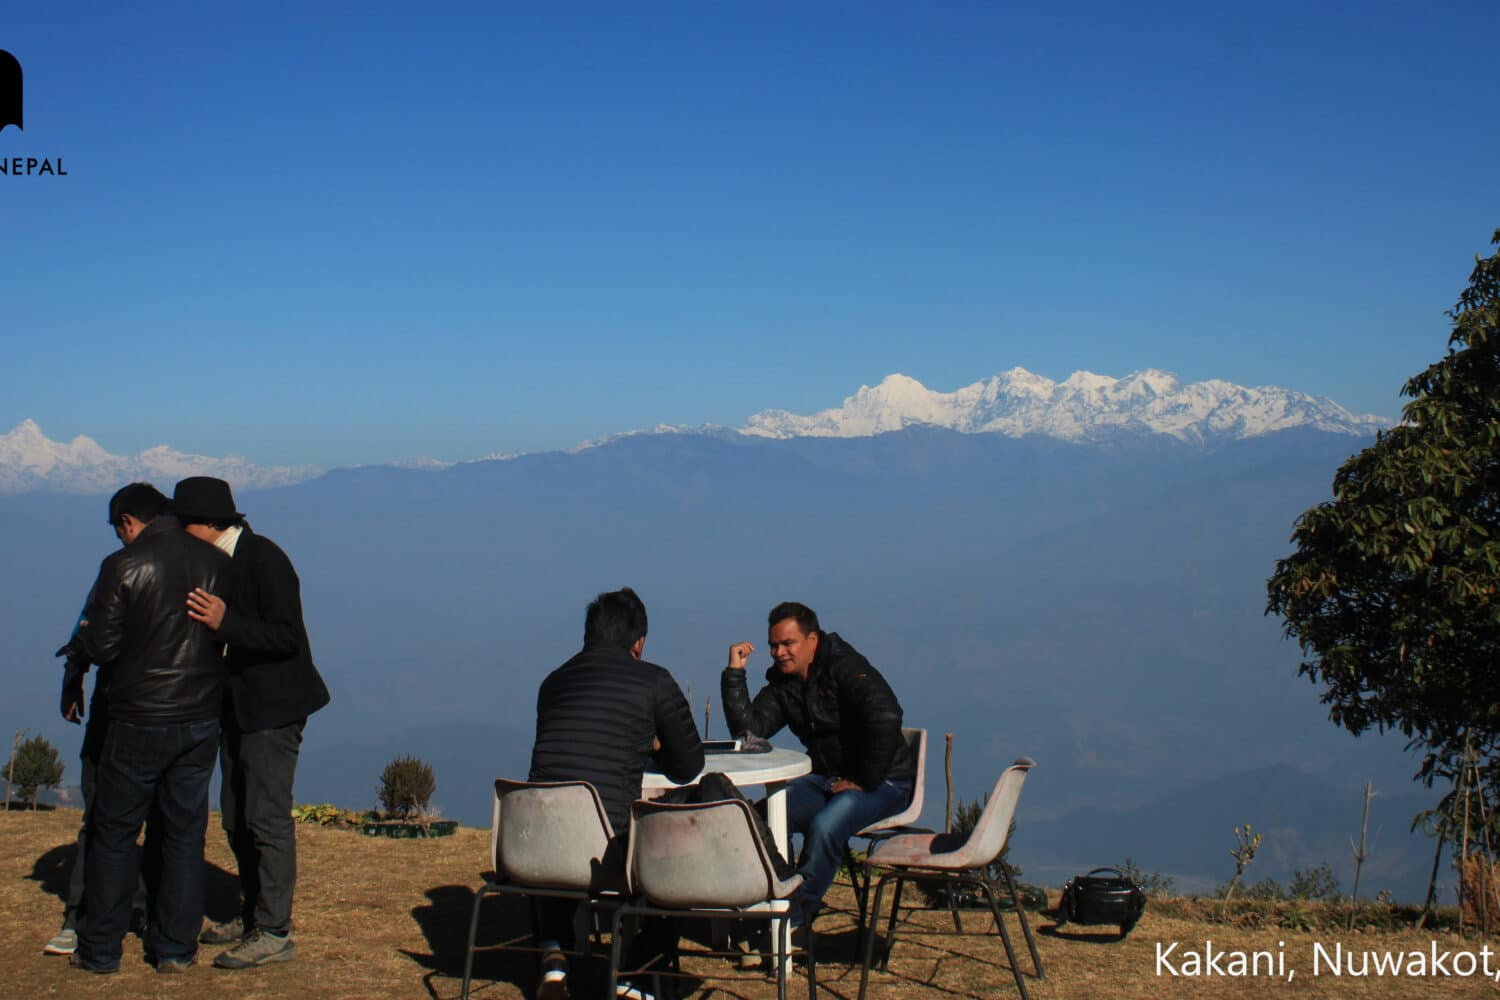 Kakani day hike from Kathmandu